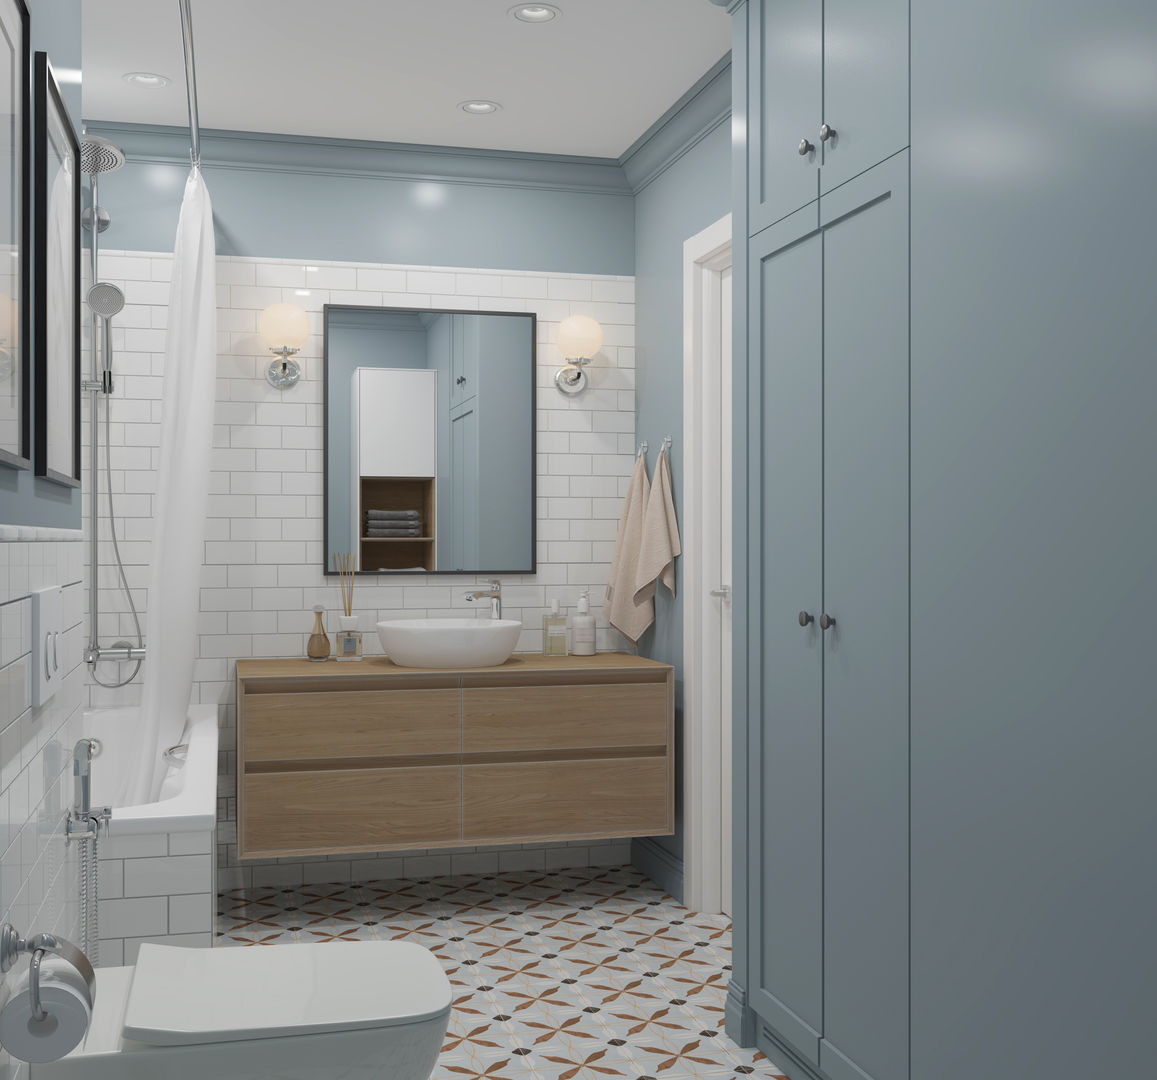 ЖК "Татьянин Парк", двухкомнатная квартира для молодой семьи, OM DESIGN OM DESIGN 北欧スタイルの お風呂・バスルーム